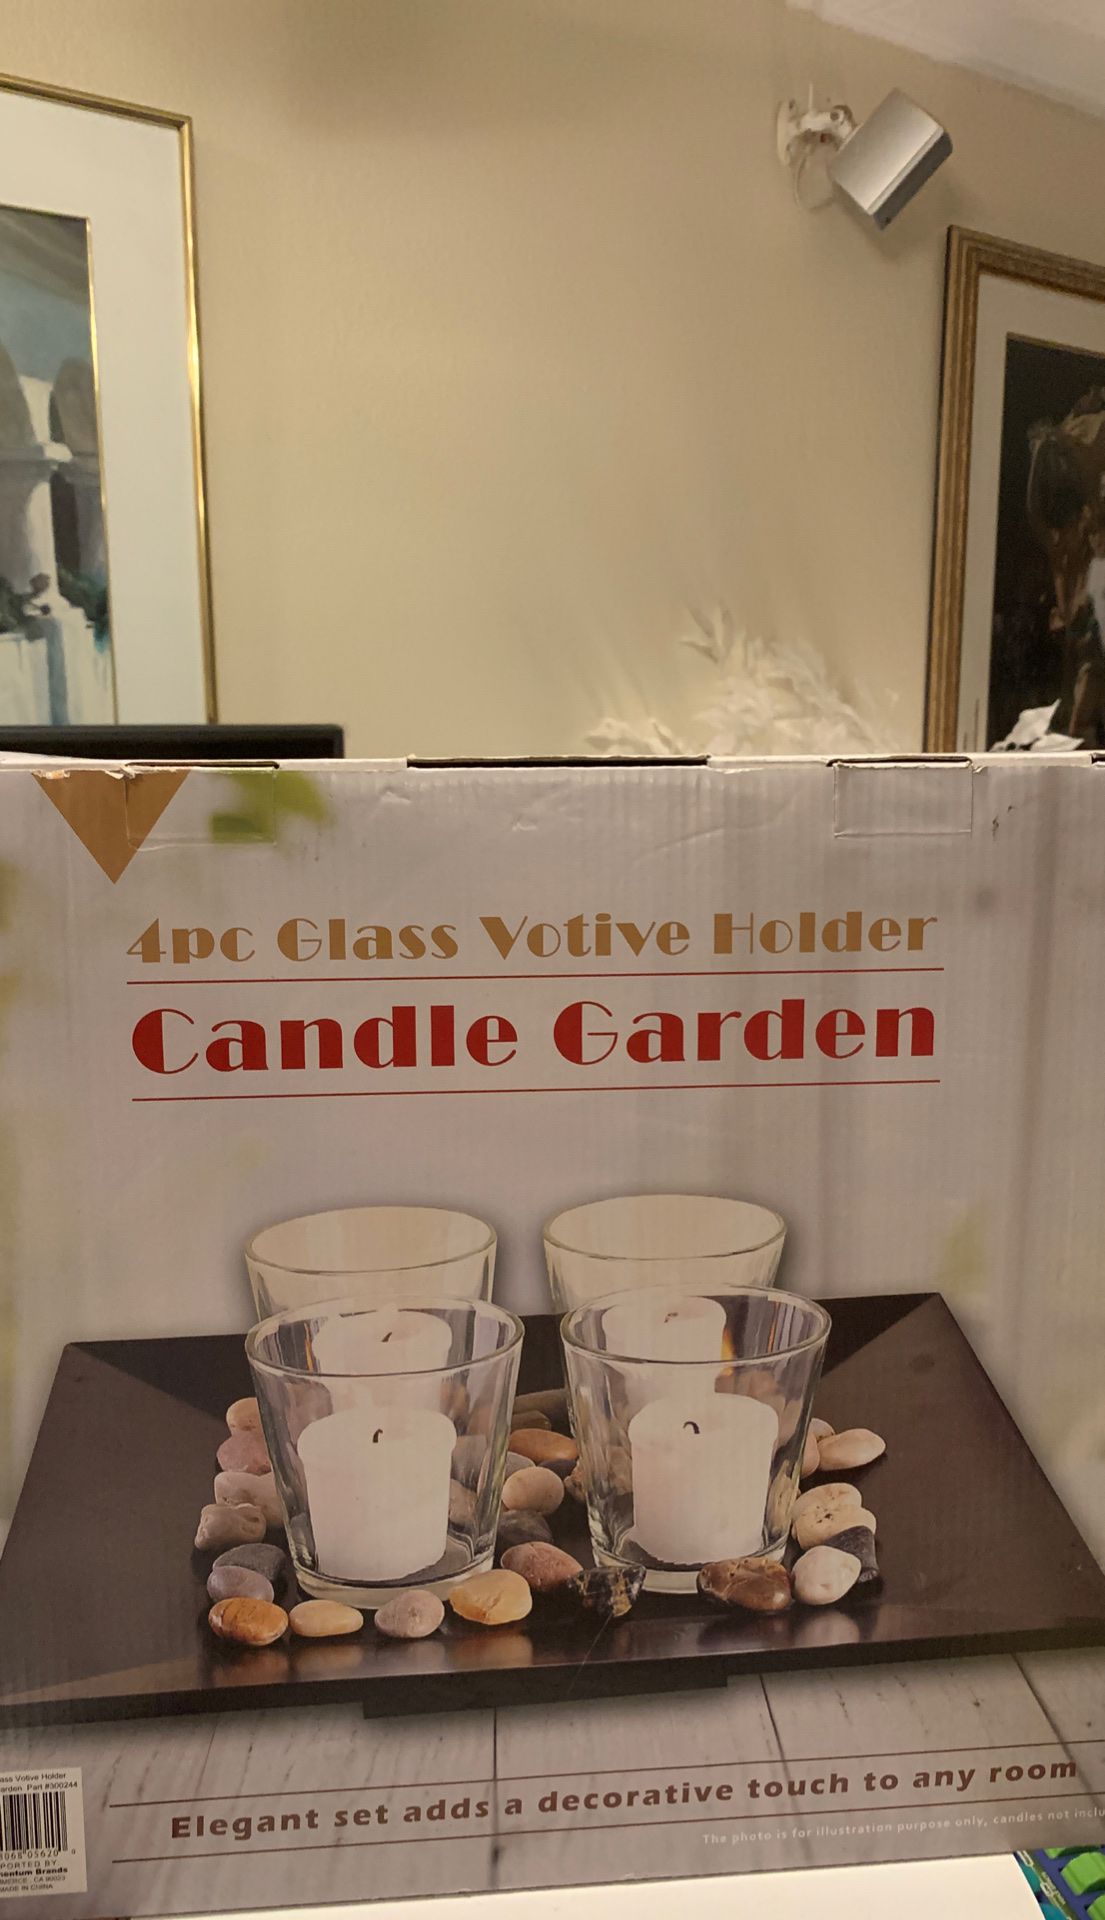 Candle Garden 4 pieces Glass Votive Holder